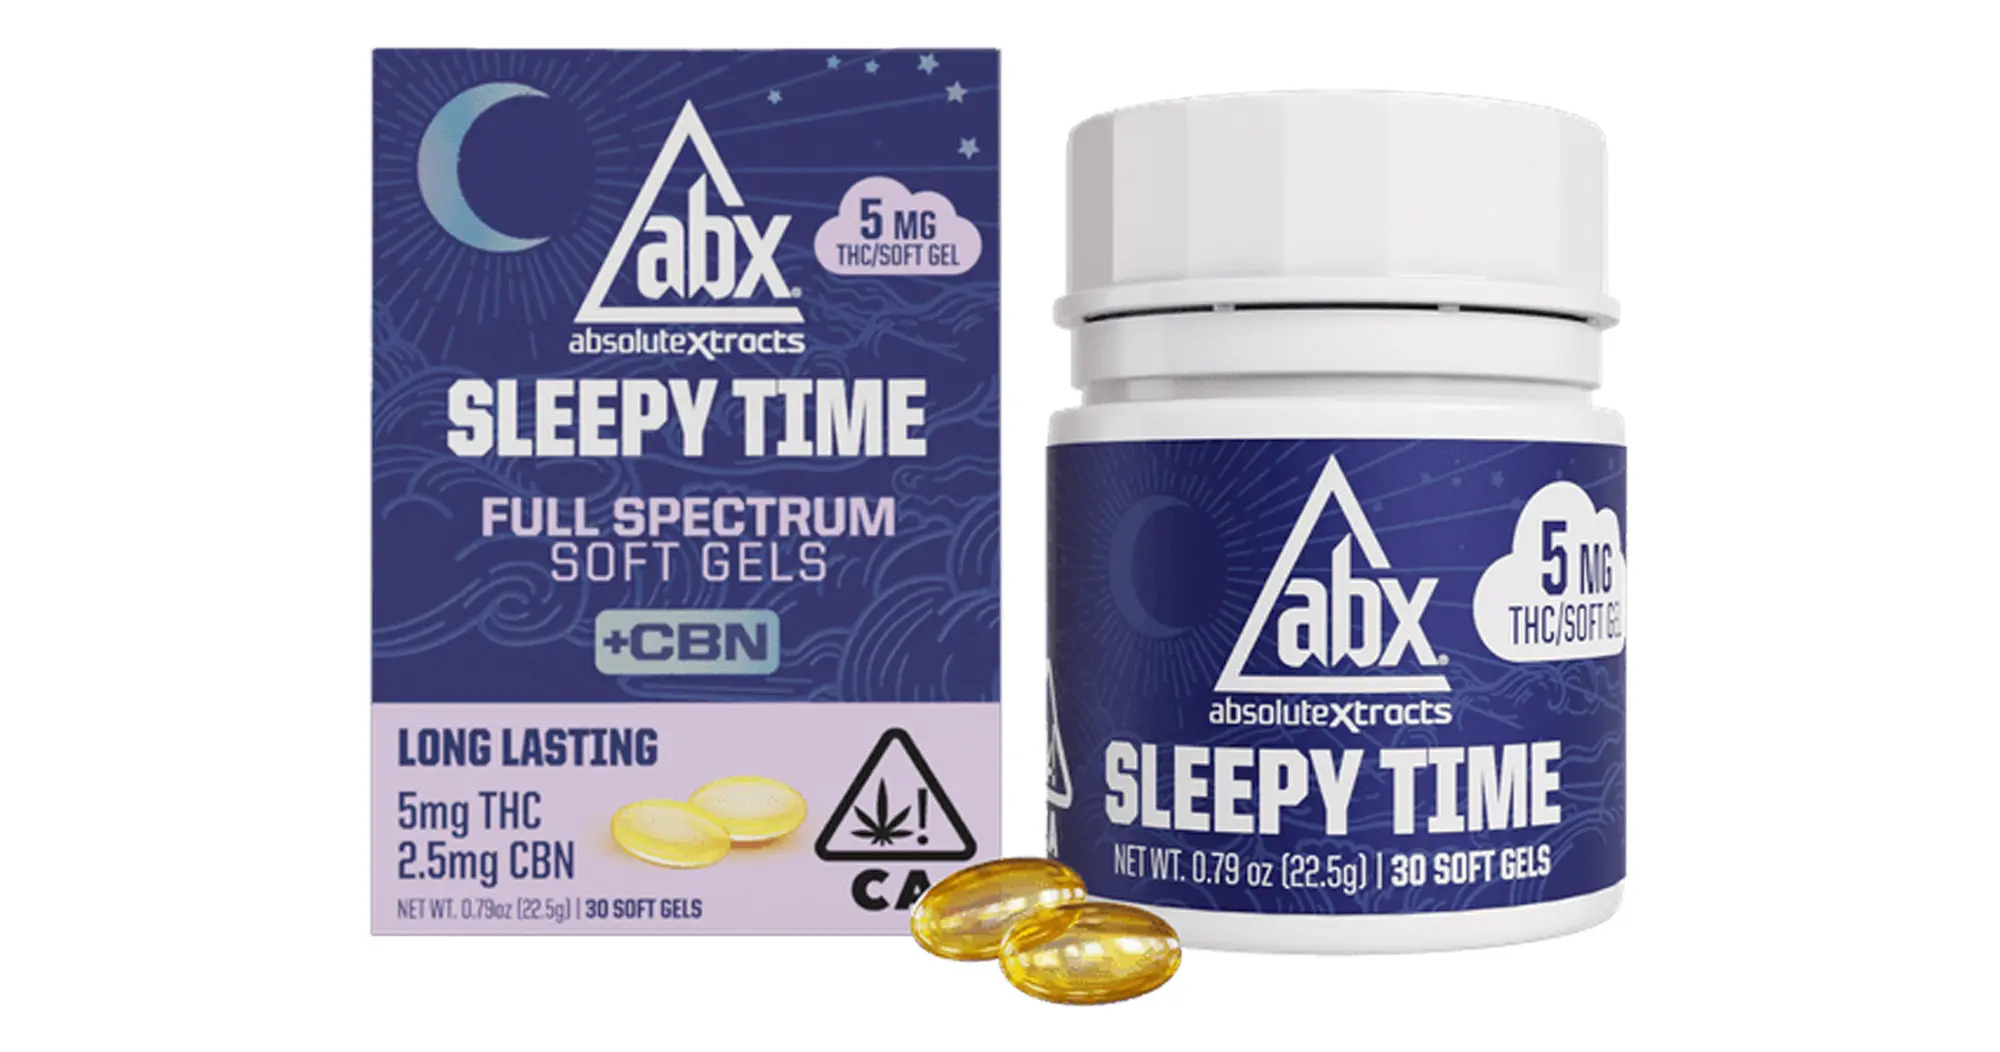 5mg Sleepy Time Solventless + CBN Soft Gels